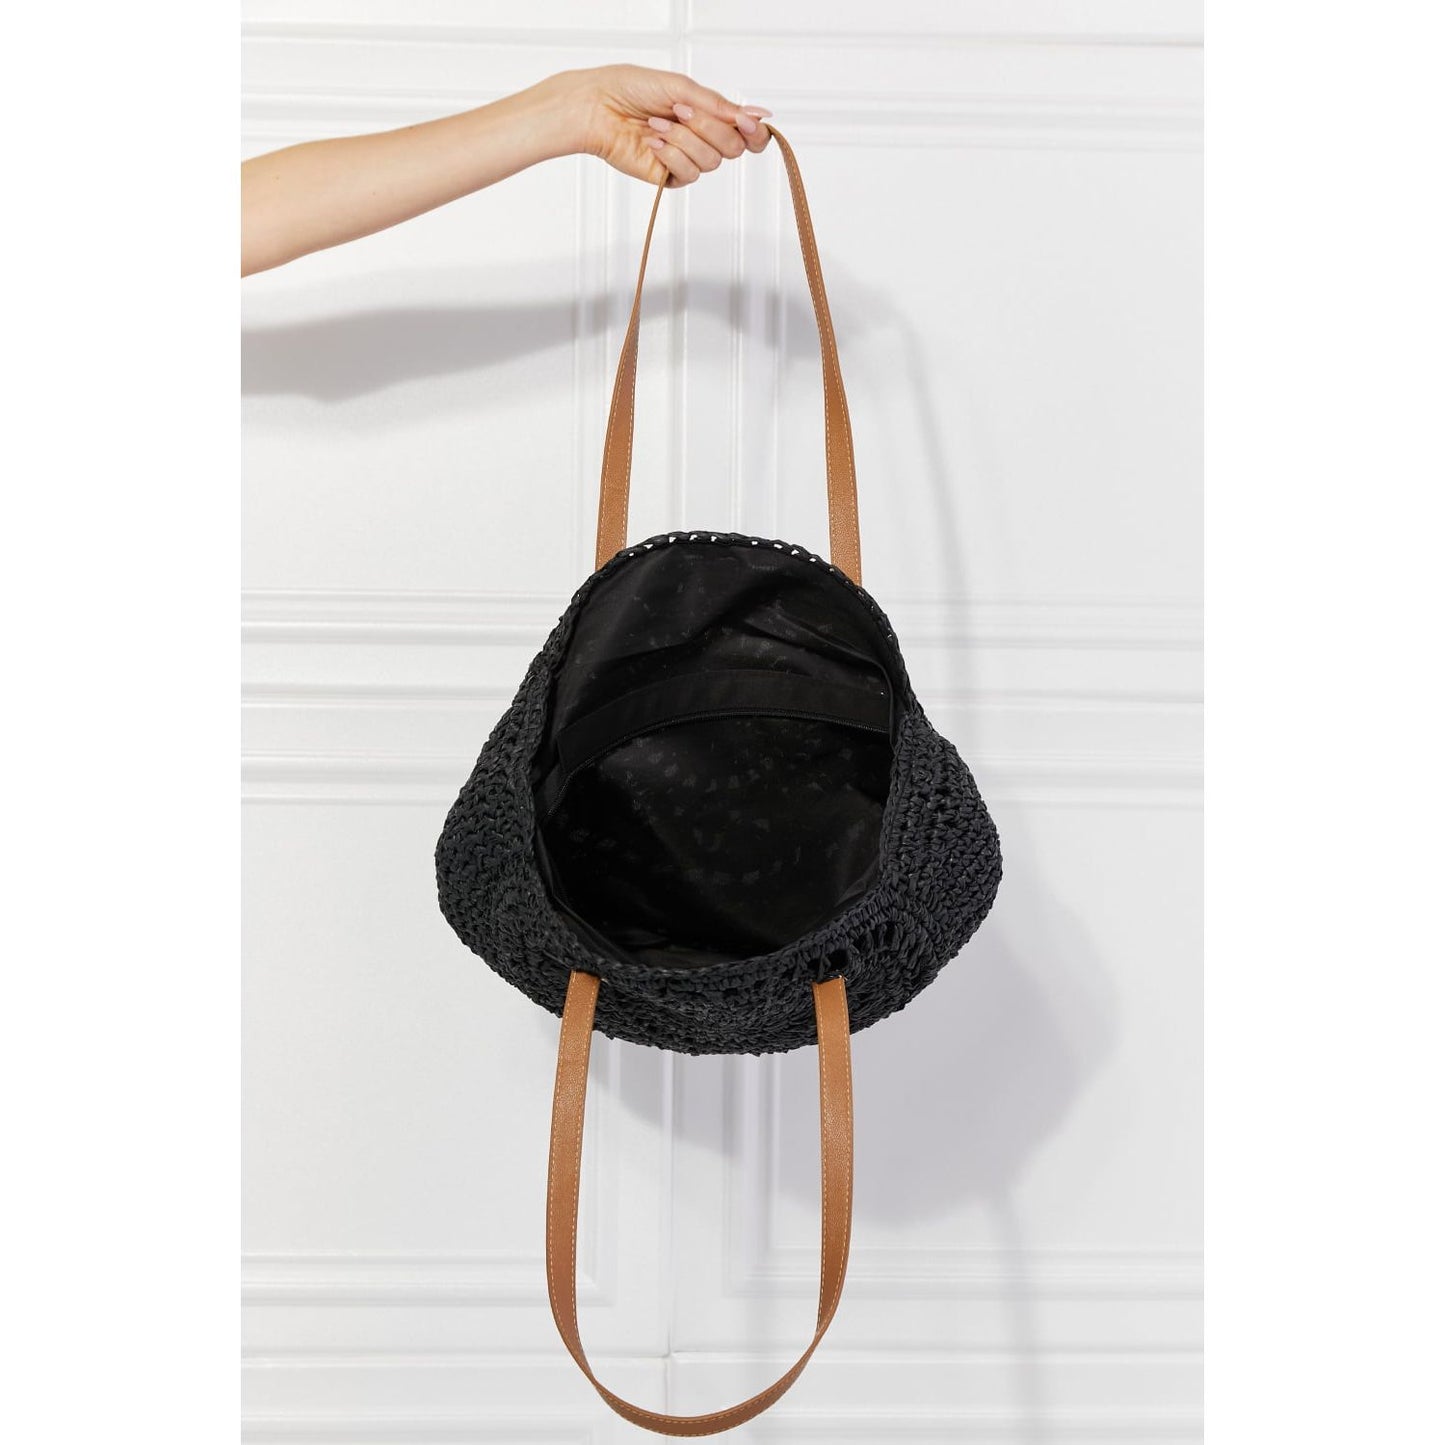 Justin Taylor C'est La Vie Crochet Handbag in Black - TiffanyzKlozet